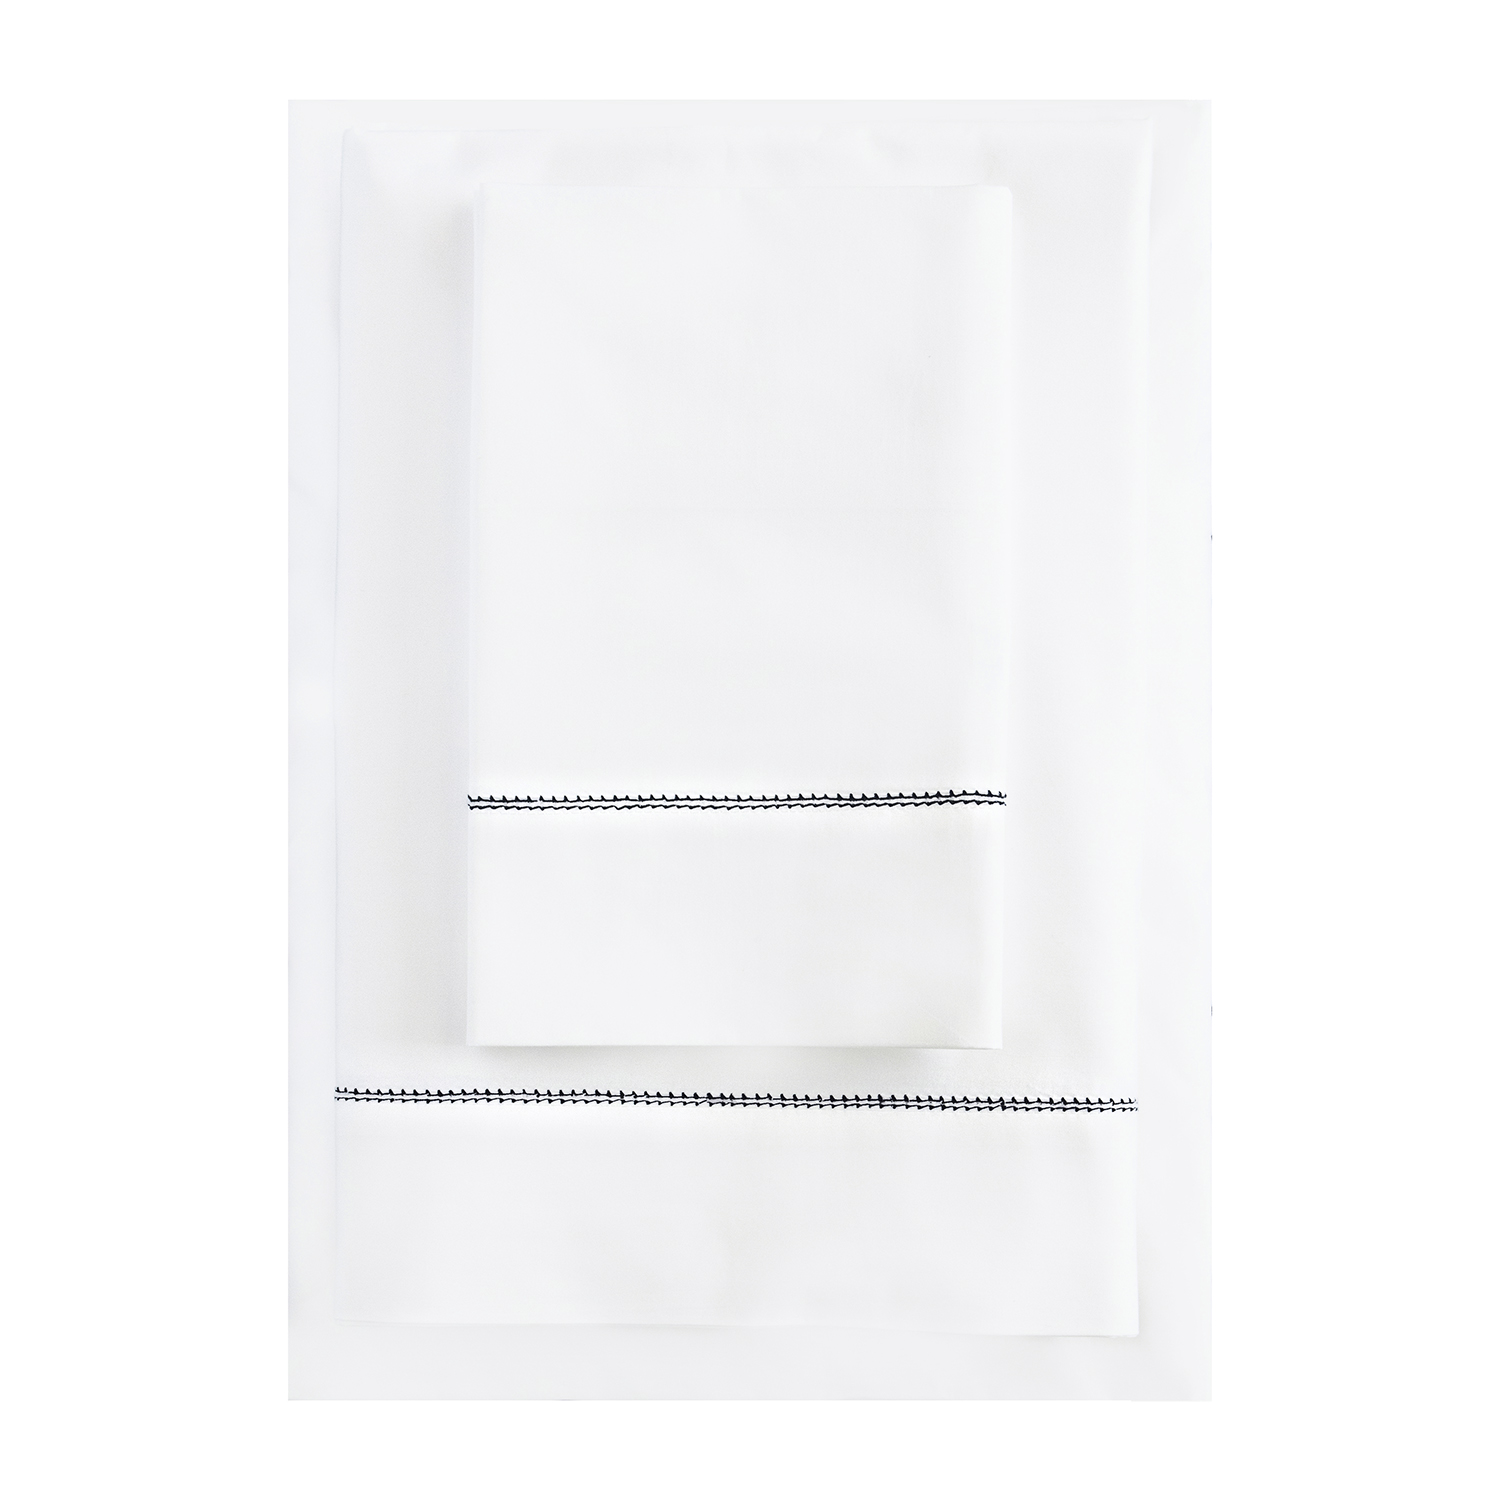 White 500TC Cotton Percale Pillowcase (Pair) - Navy Blue Hemstitch